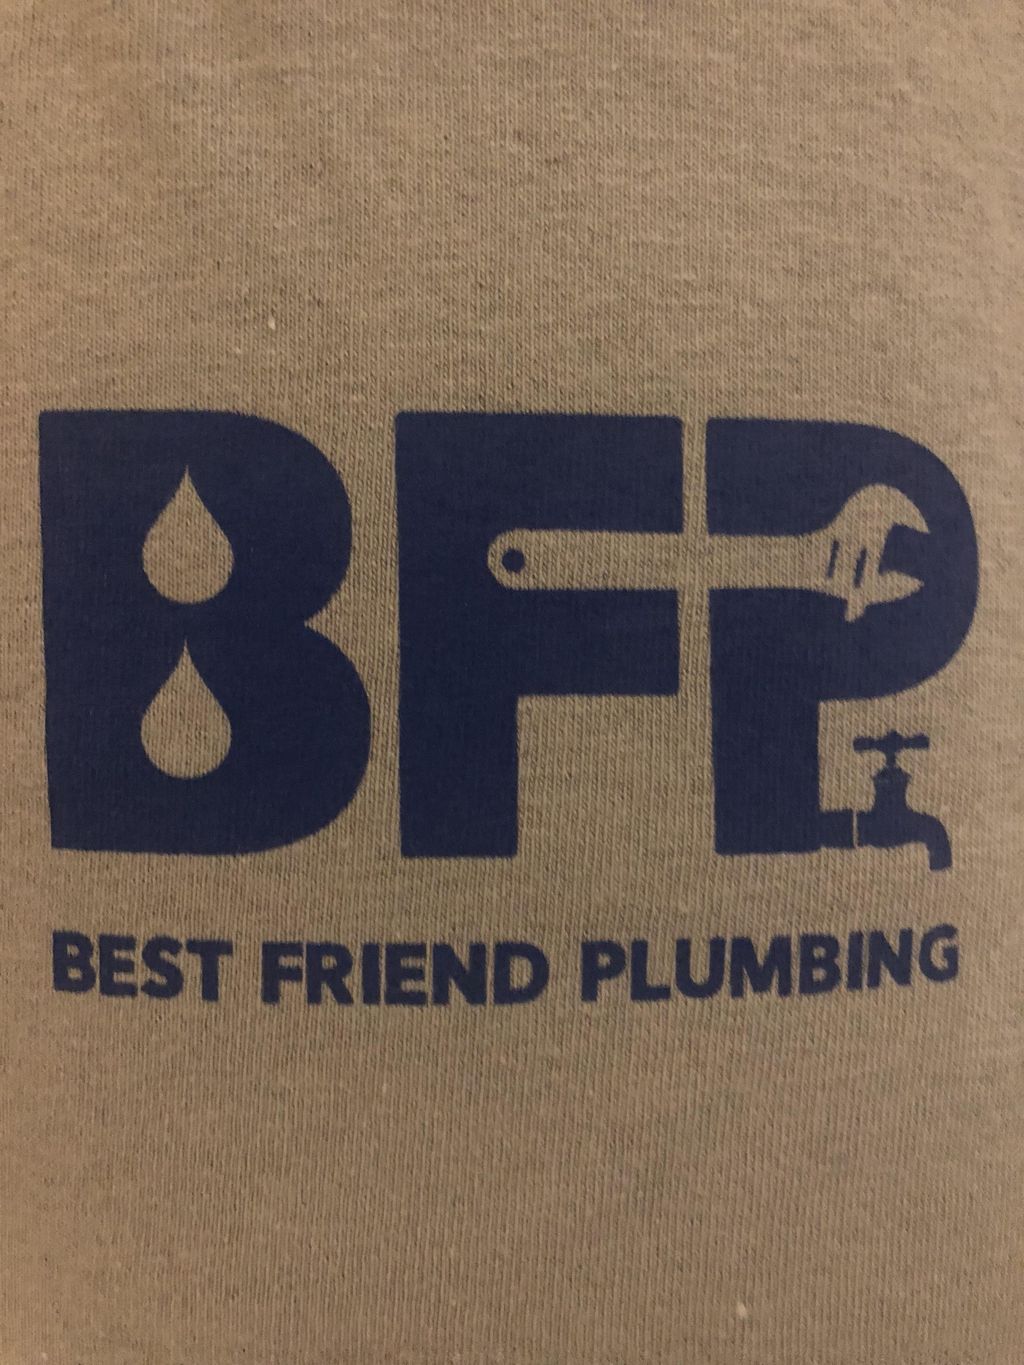 Best Friend Plumbing